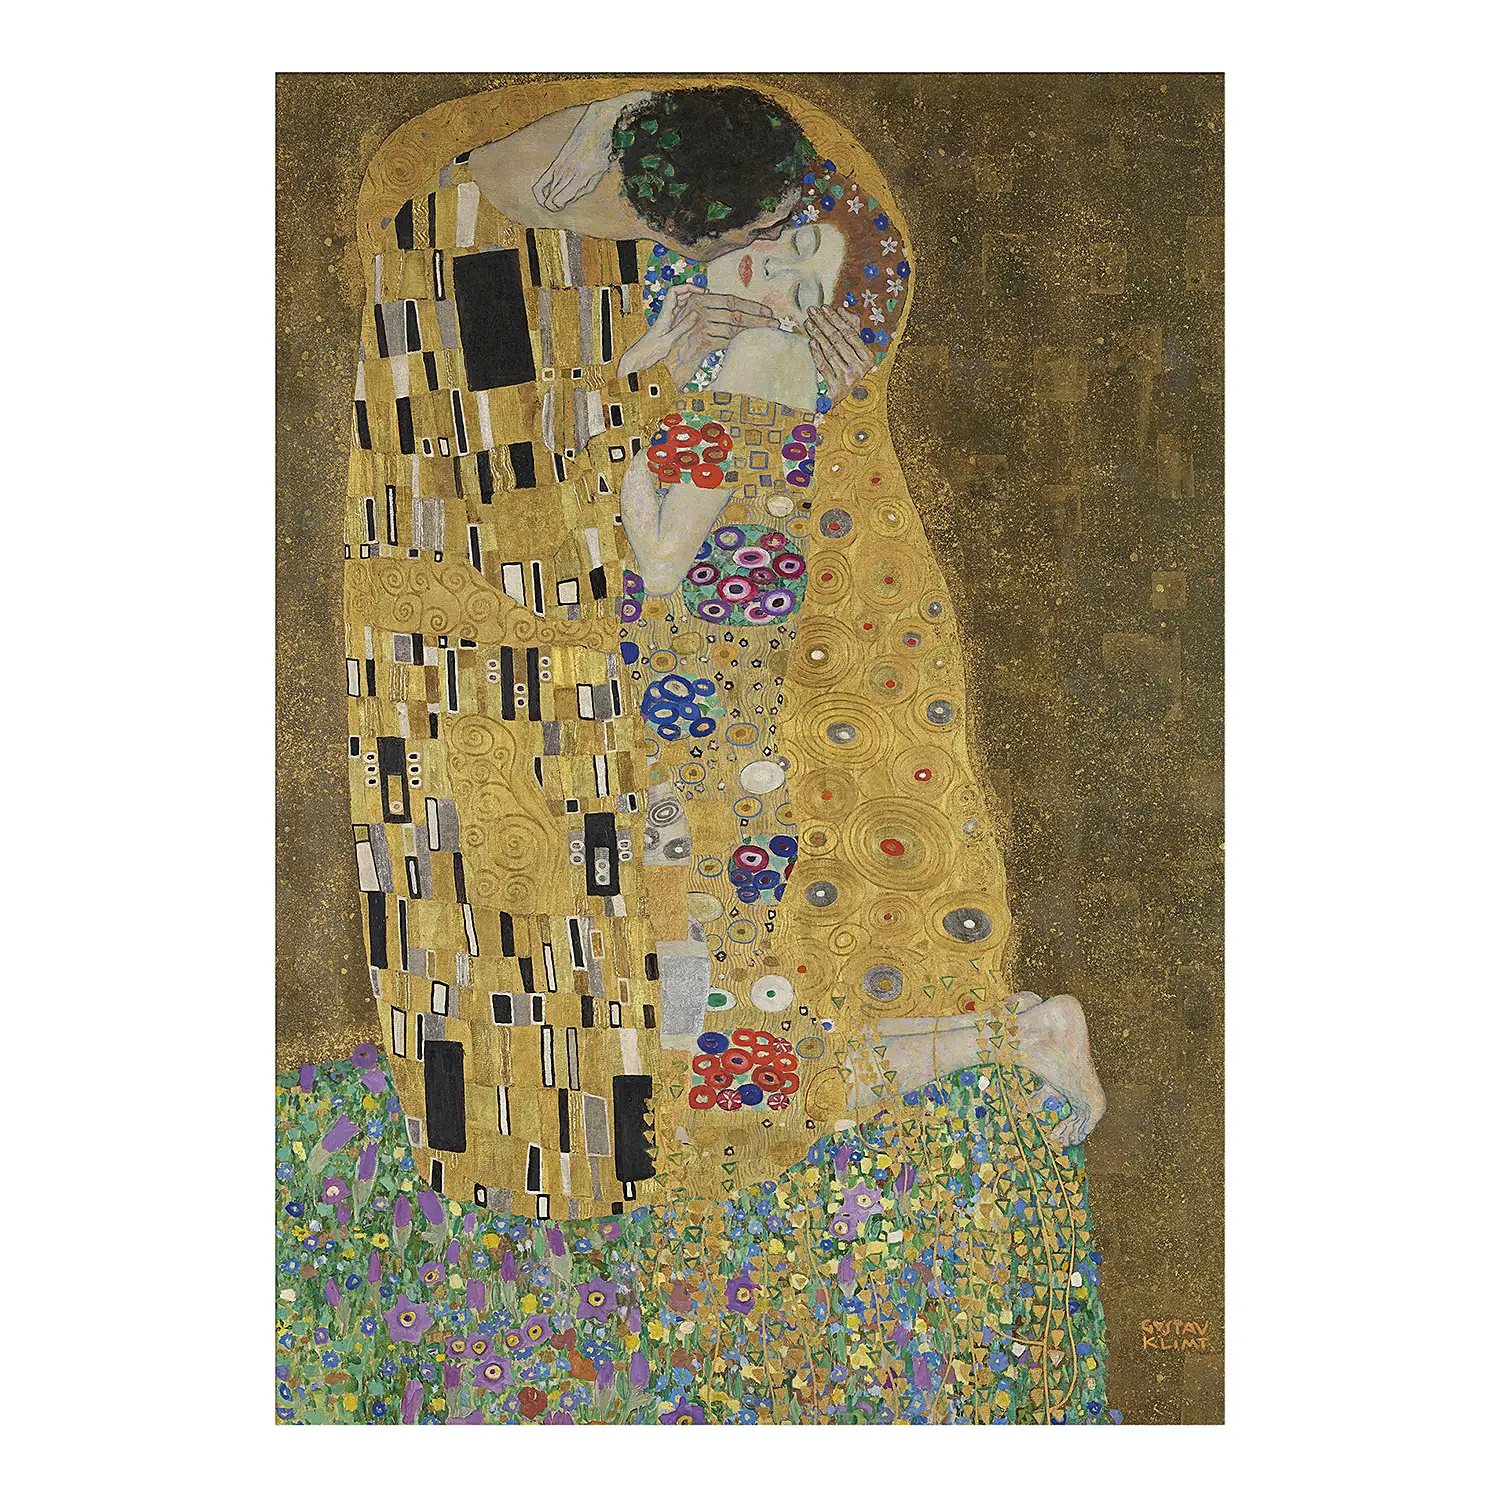 Leinwandbild Der Kuss (Gustav Klimt)